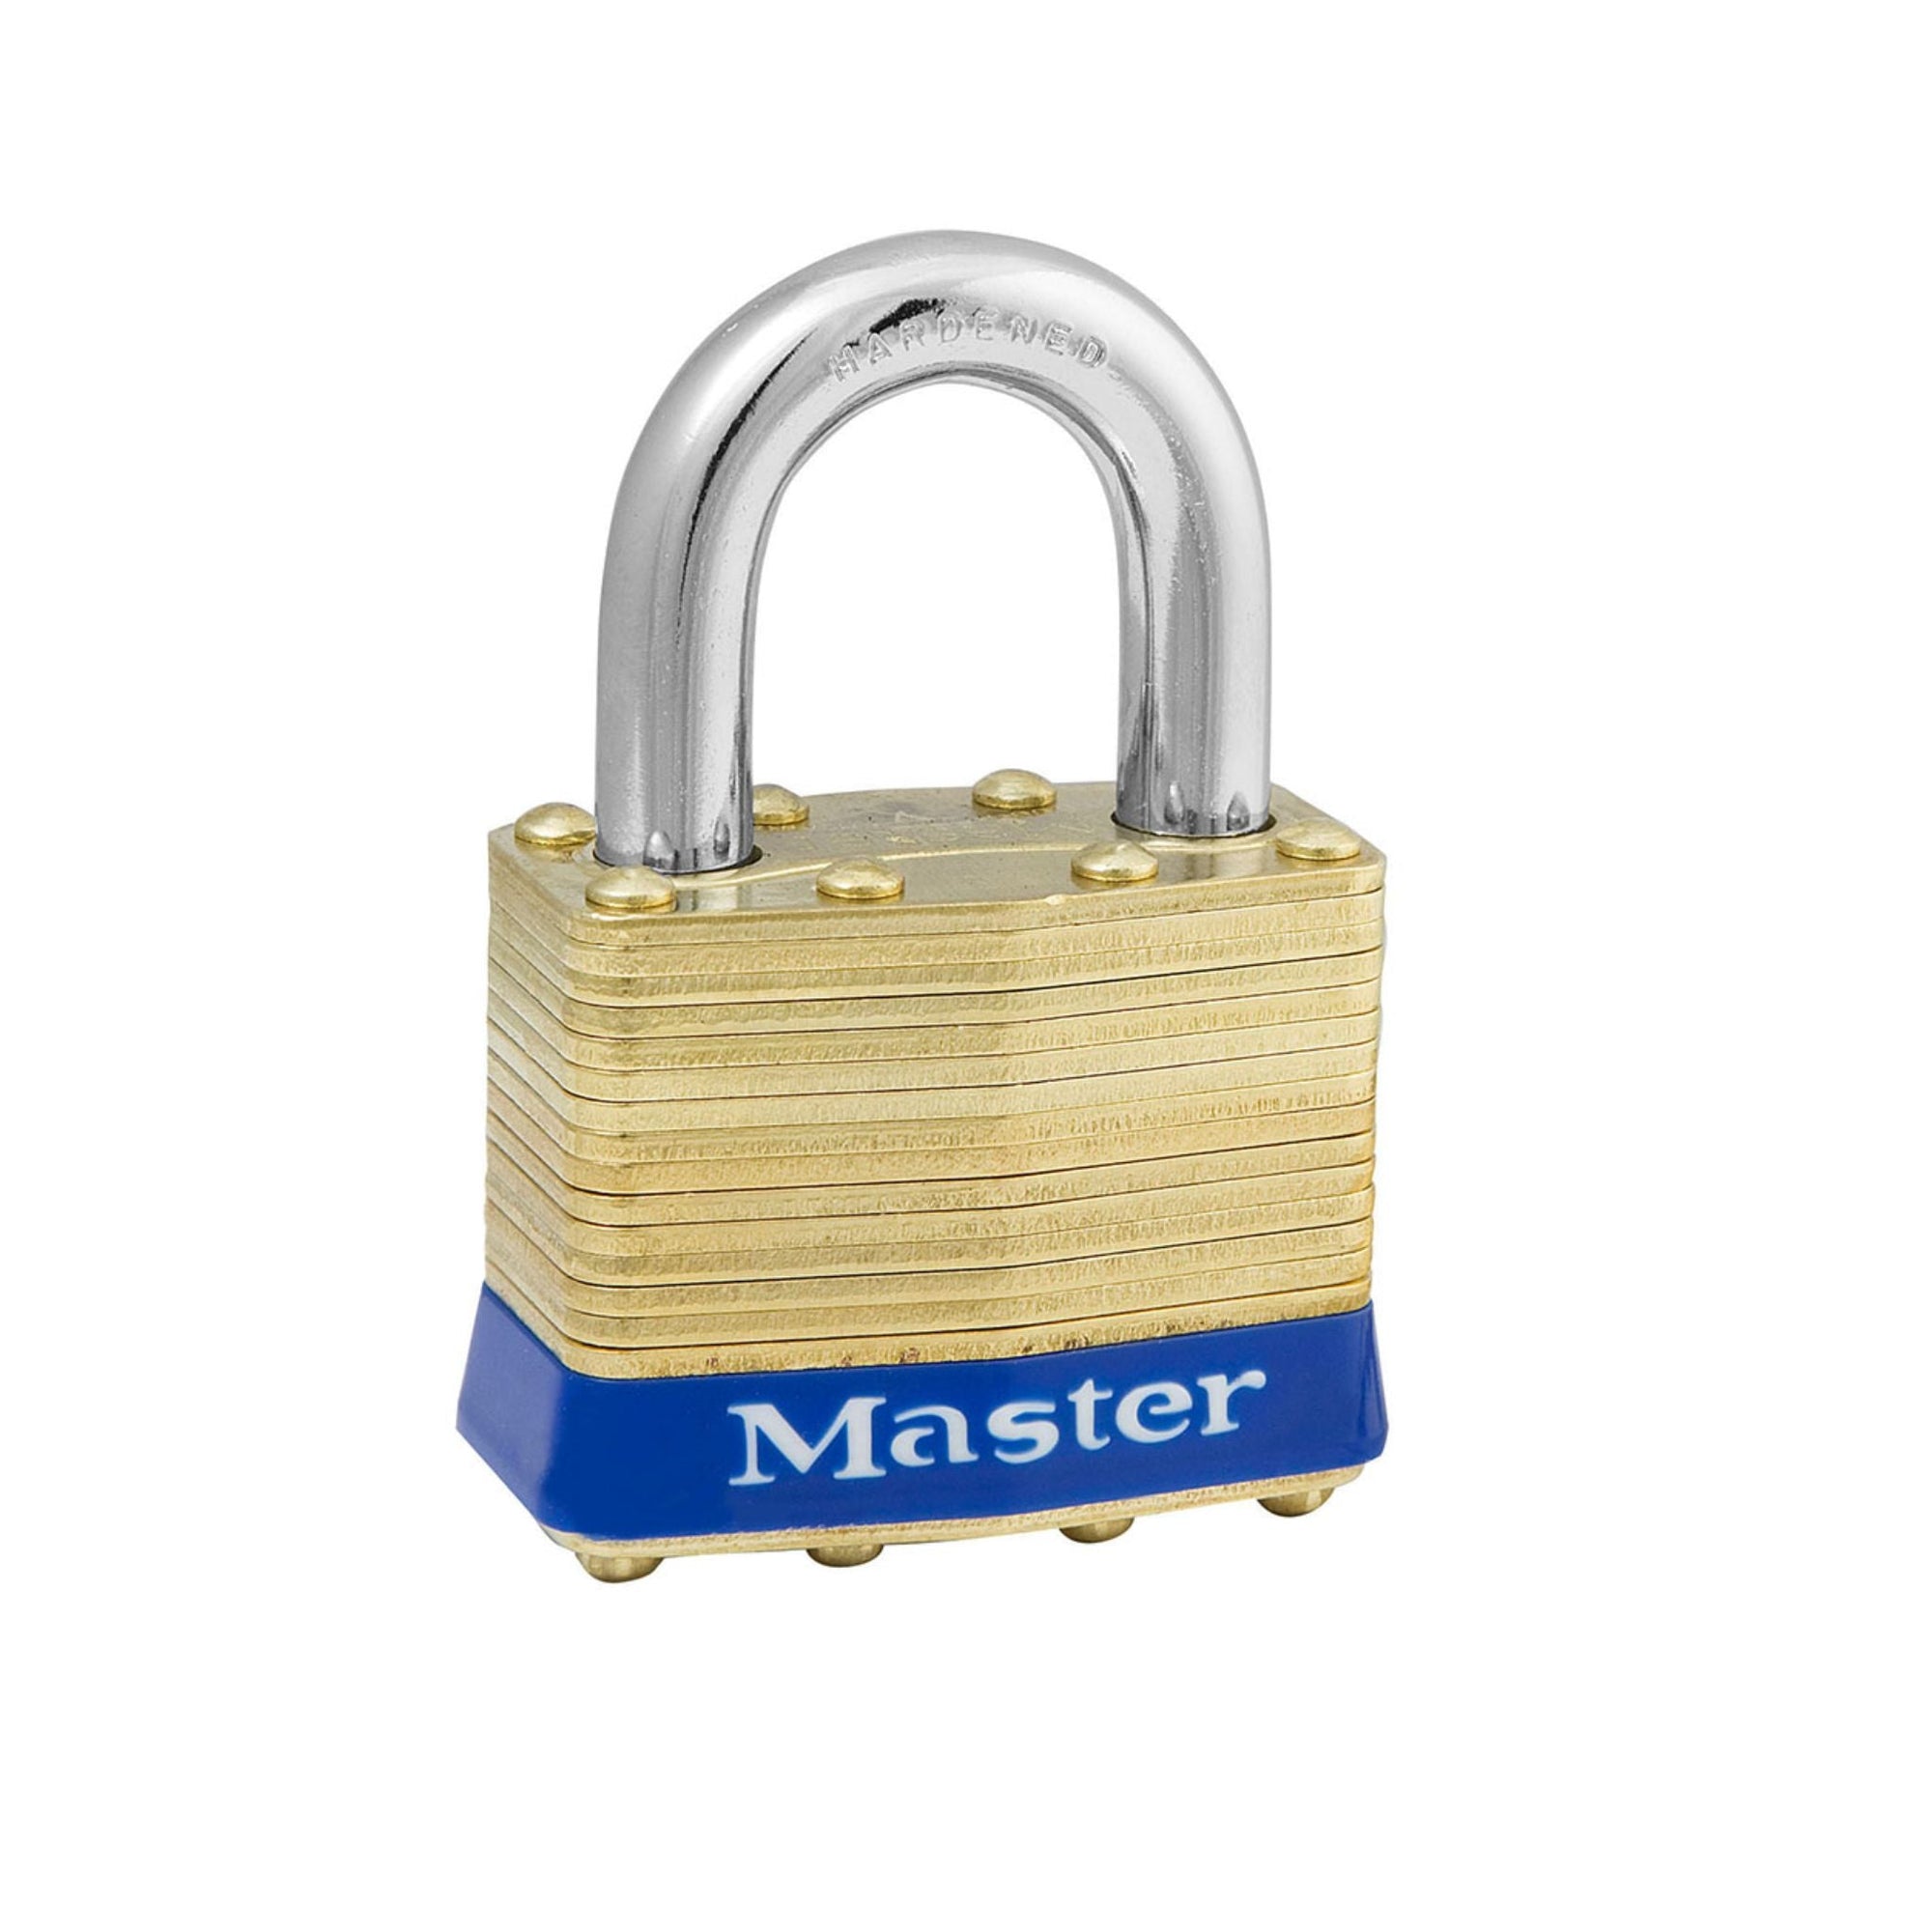 Master Lock 2KA 0317 Lock Laminated brass No. 2 Series Padlock Keyed to Match Existing Key Number KA0317 - The Lock Source